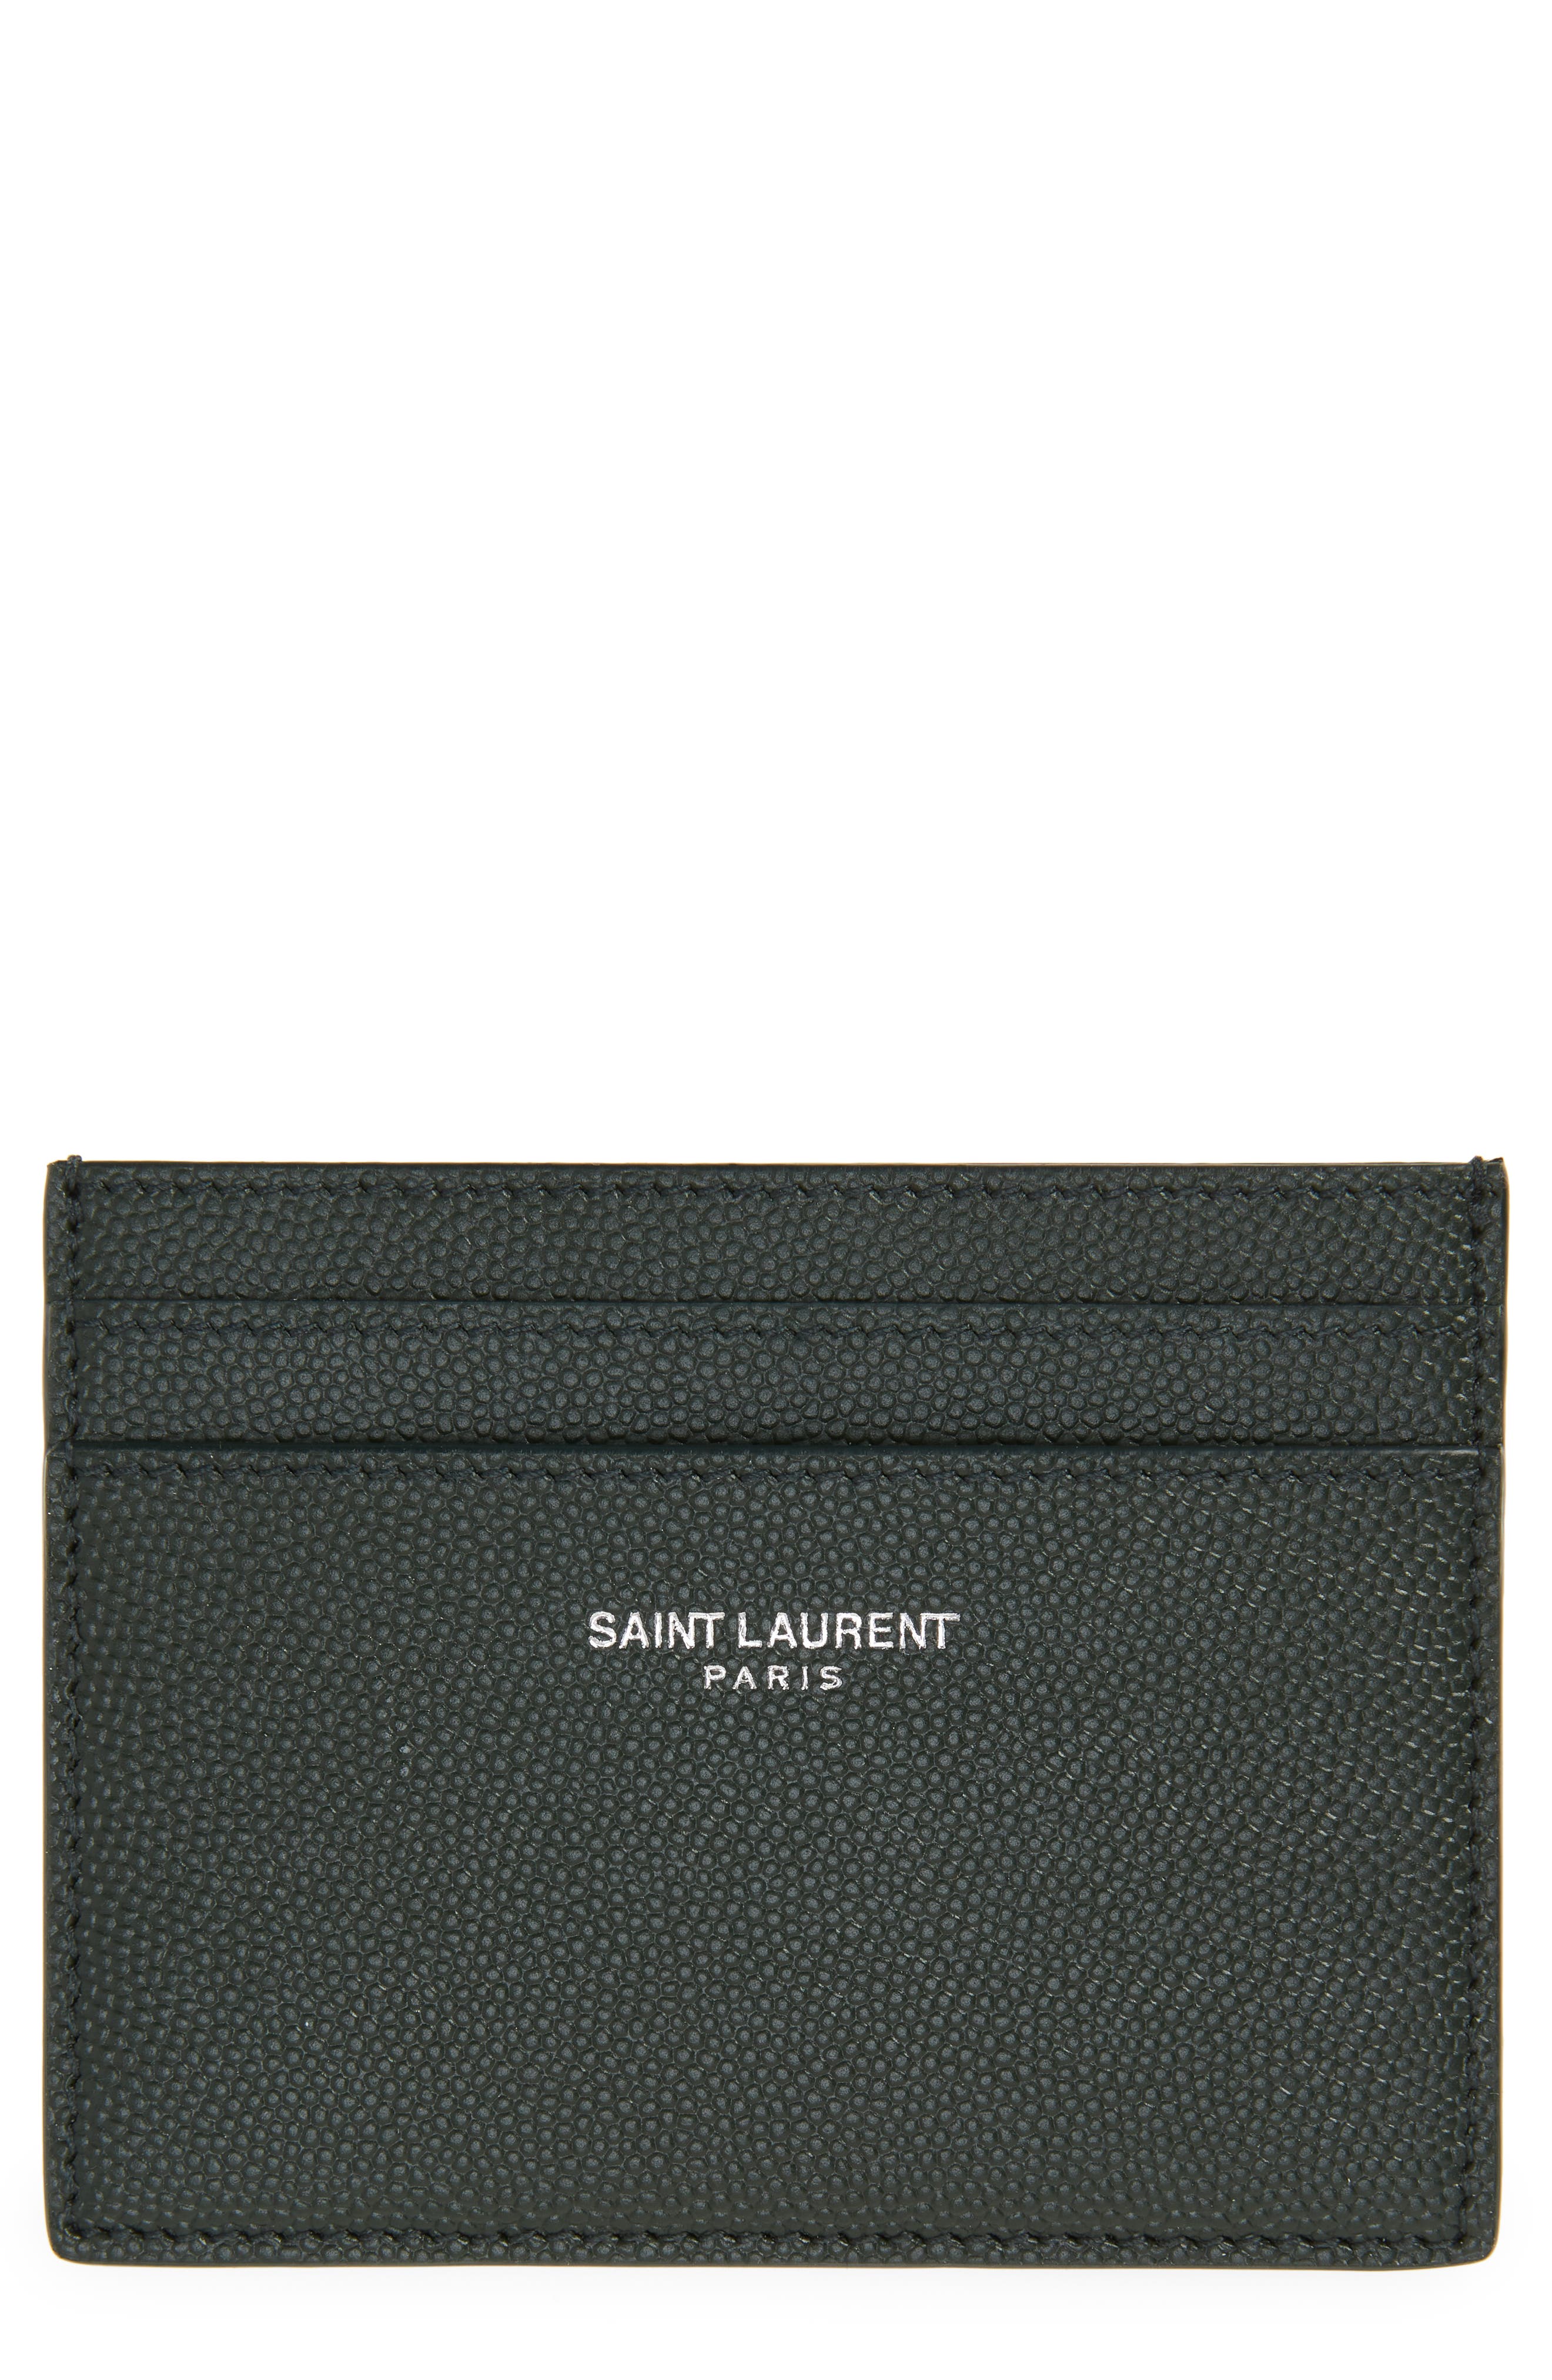 Saint Laurent Pebble Grain Leather Card Case in Dark Green at Nordstrom